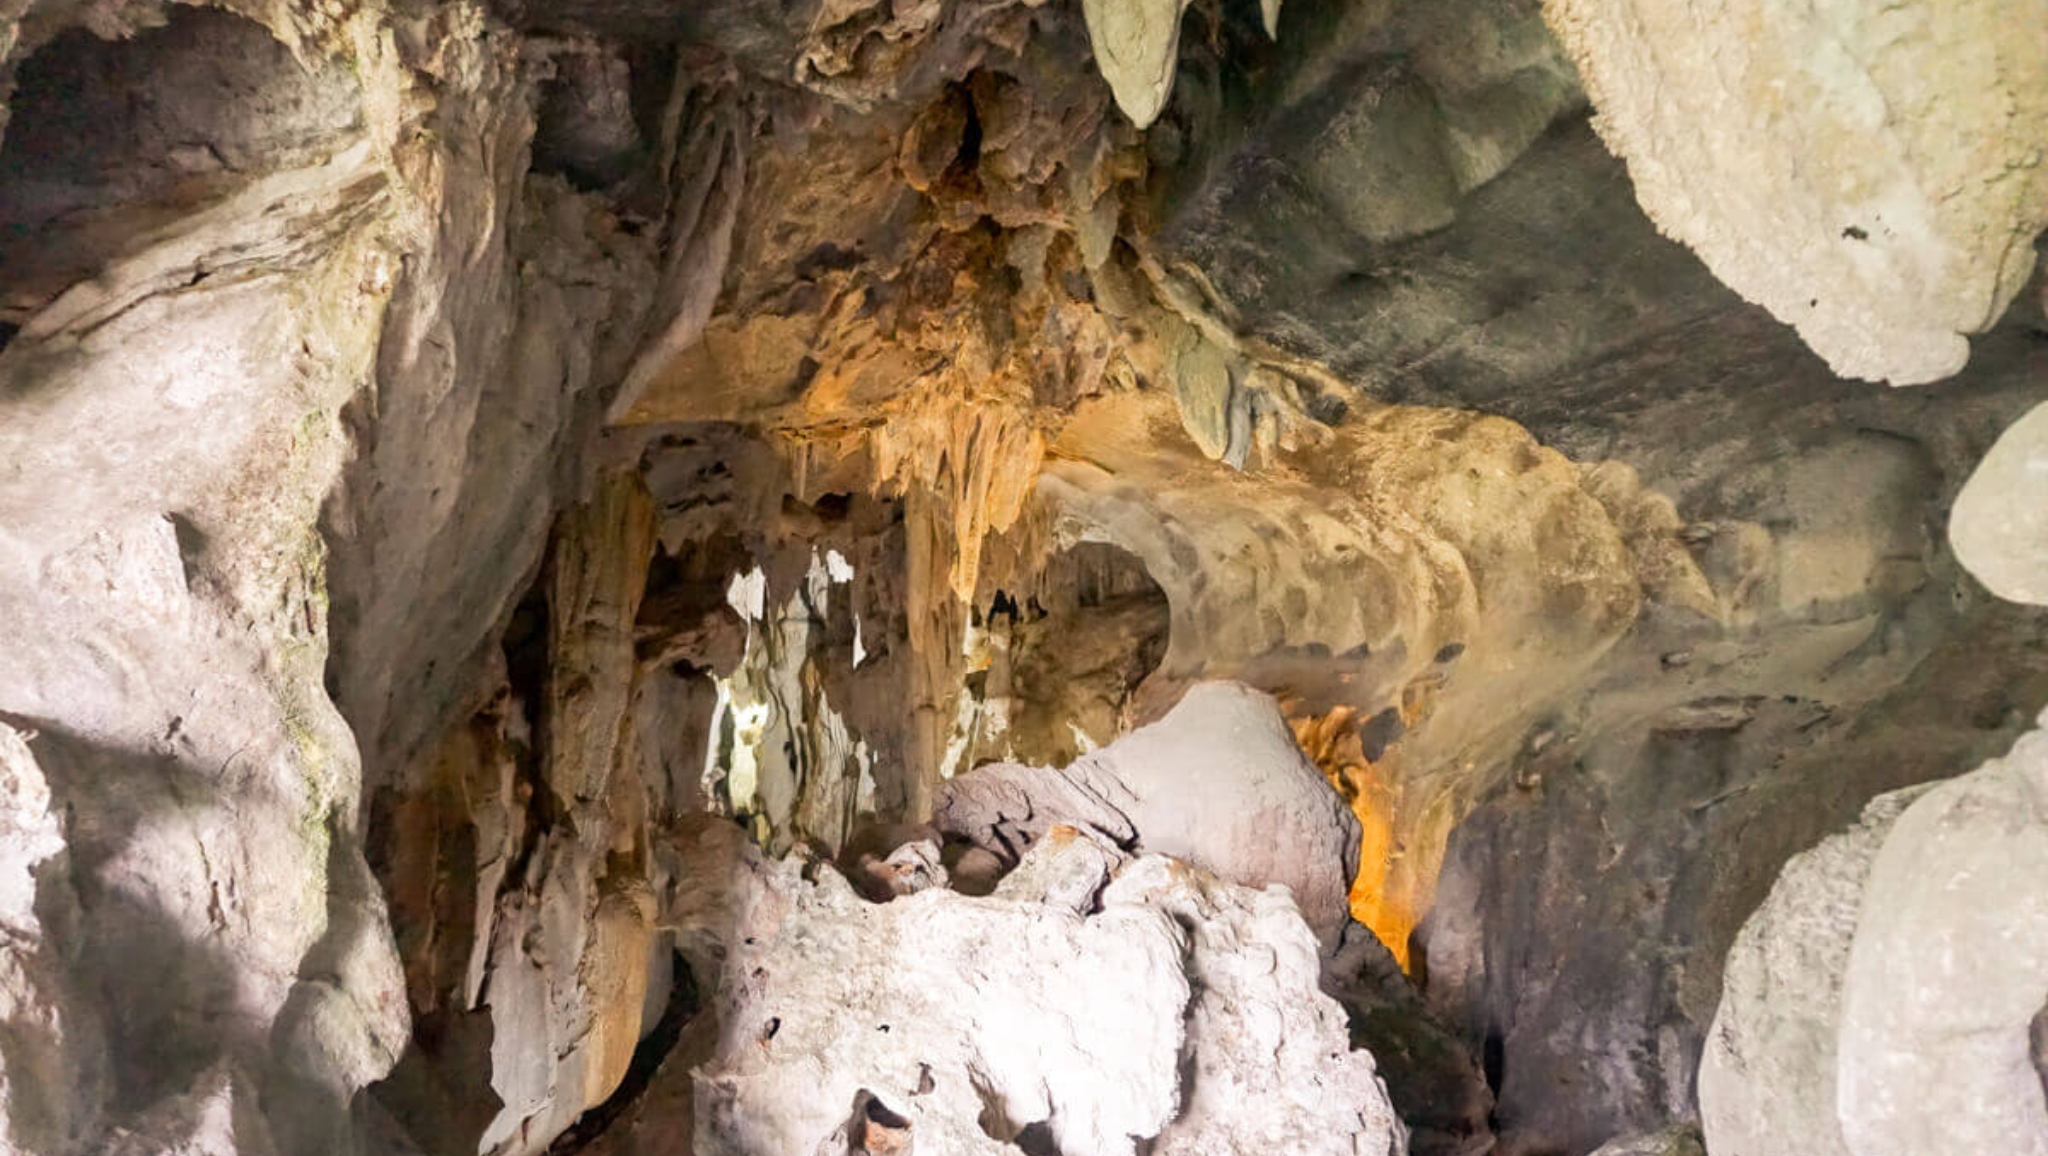 Trung Trang, An Awe Inspiring Cave In Halong